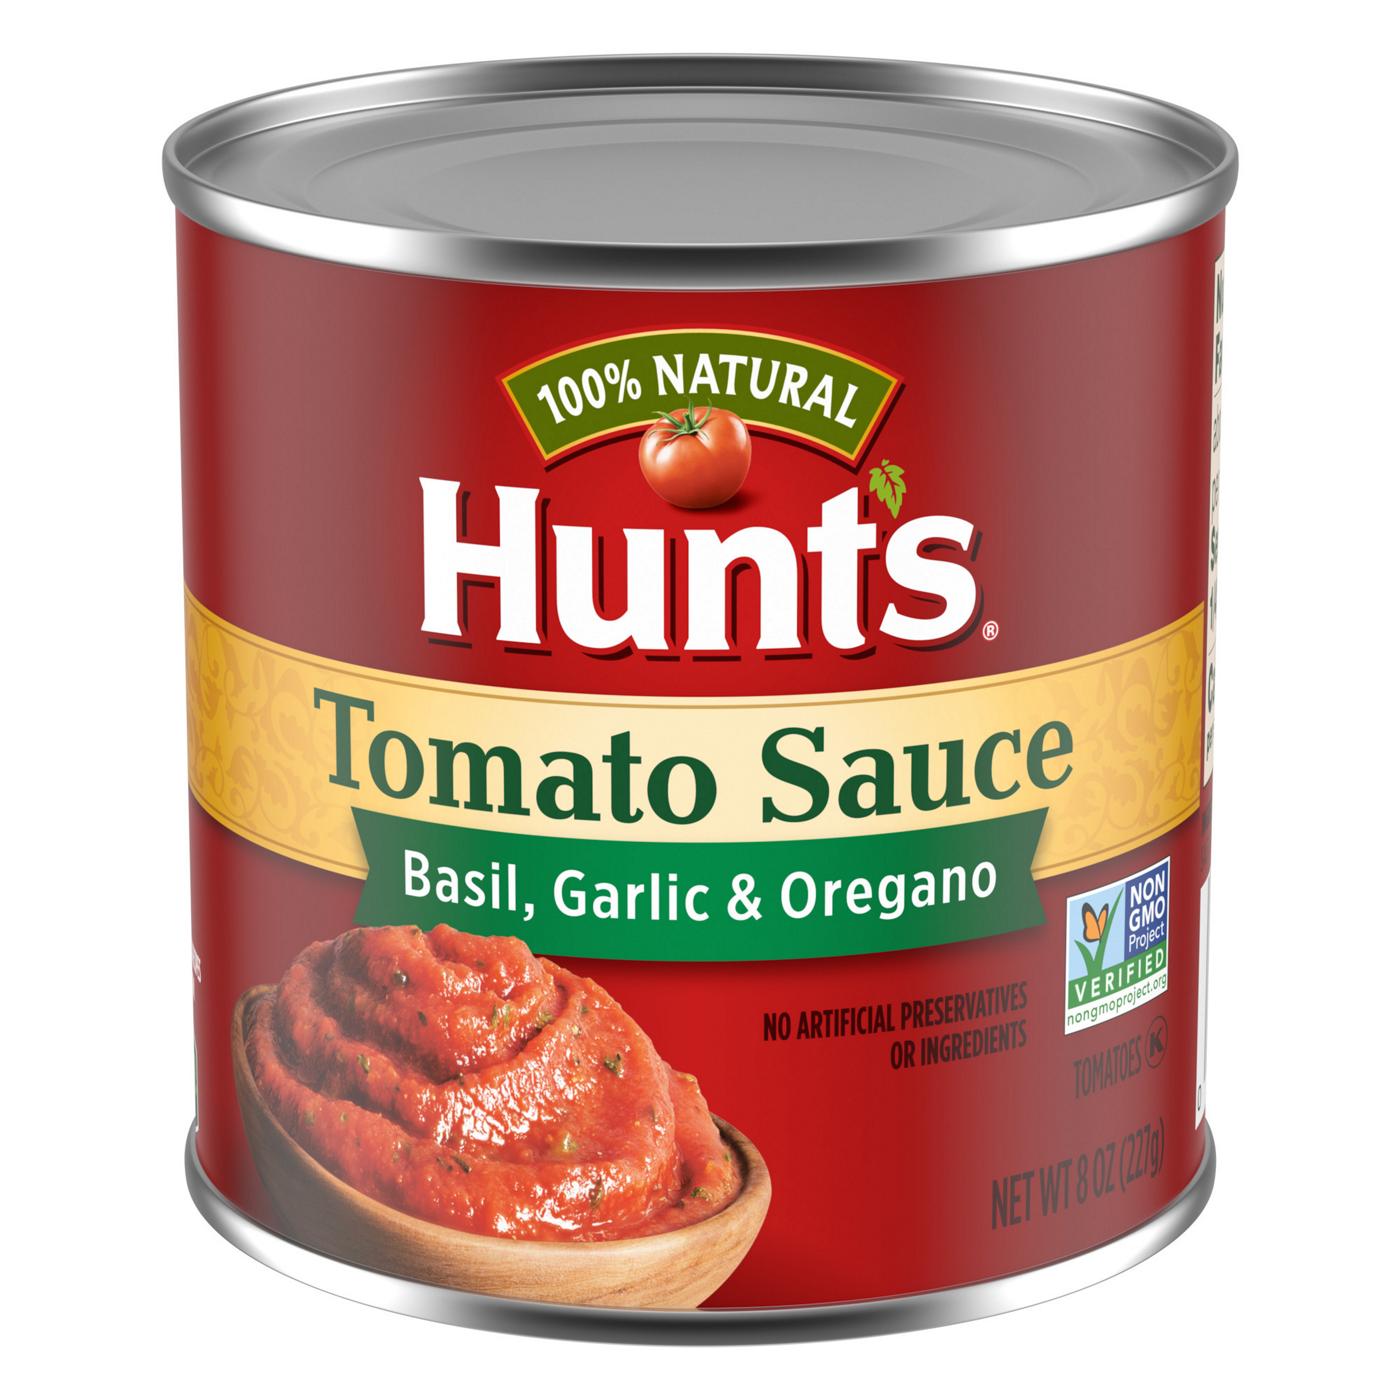 Hunt's Tomato Sauce with Basil, Garlic and Oregano; image 1 of 7